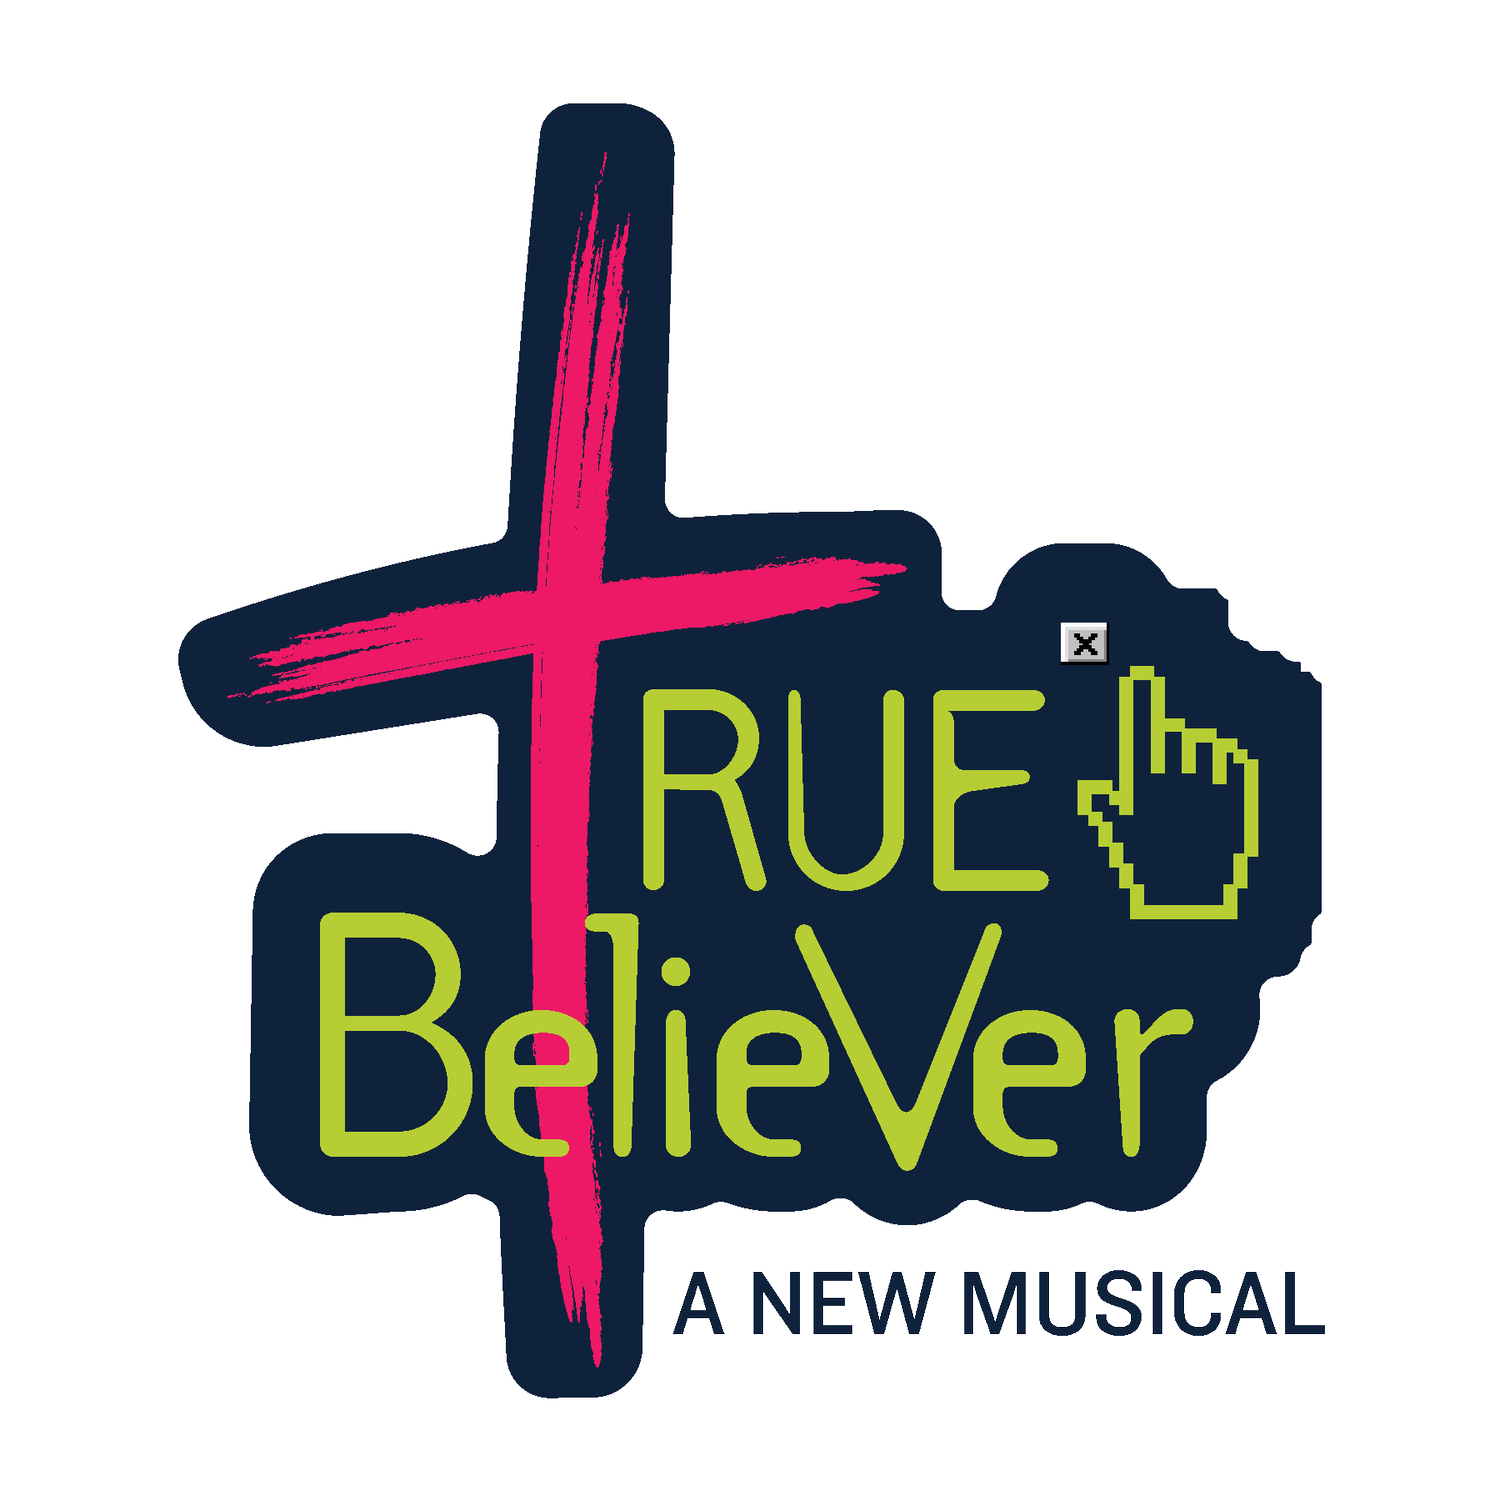 True Believer: A New Musical